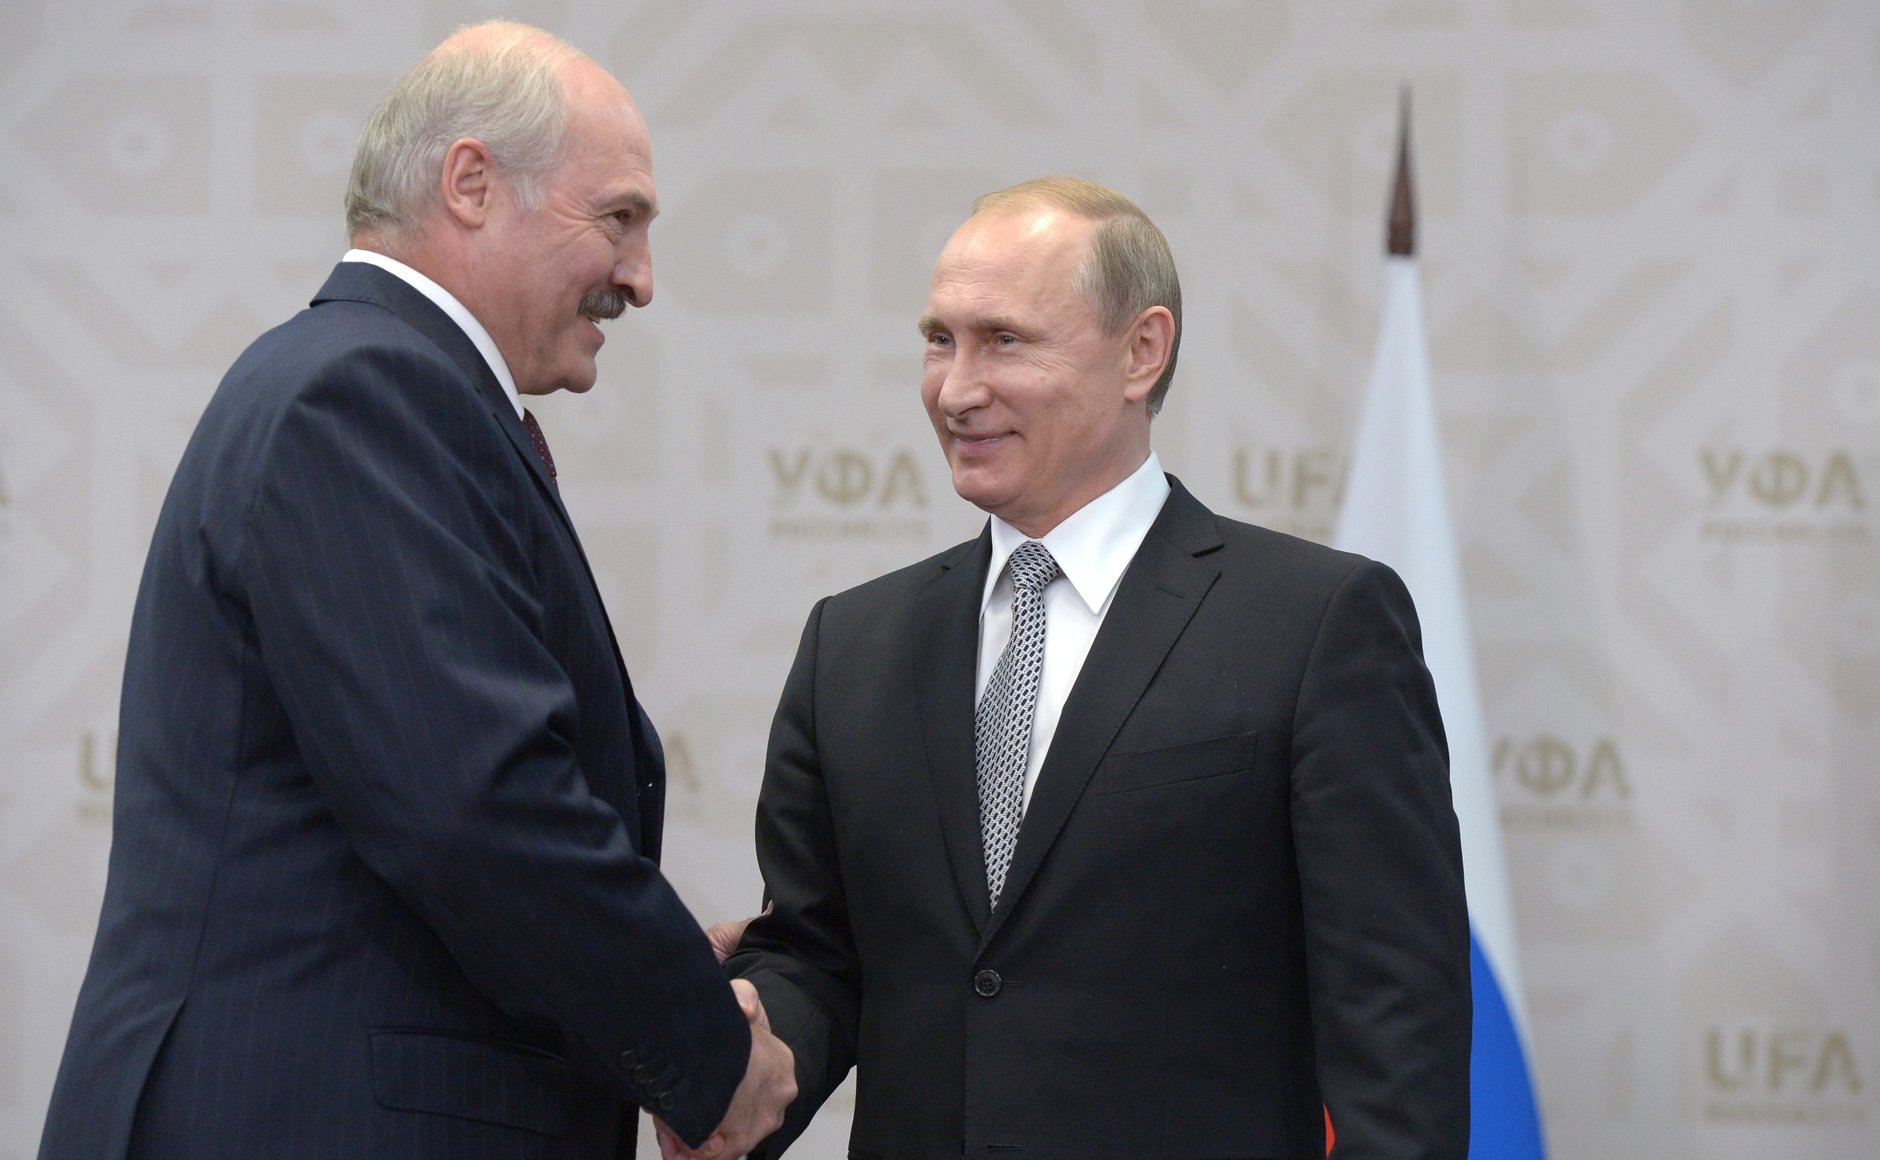 Vladimir Putin and Aleksandr Lukashenko BRICS summit 2015 03